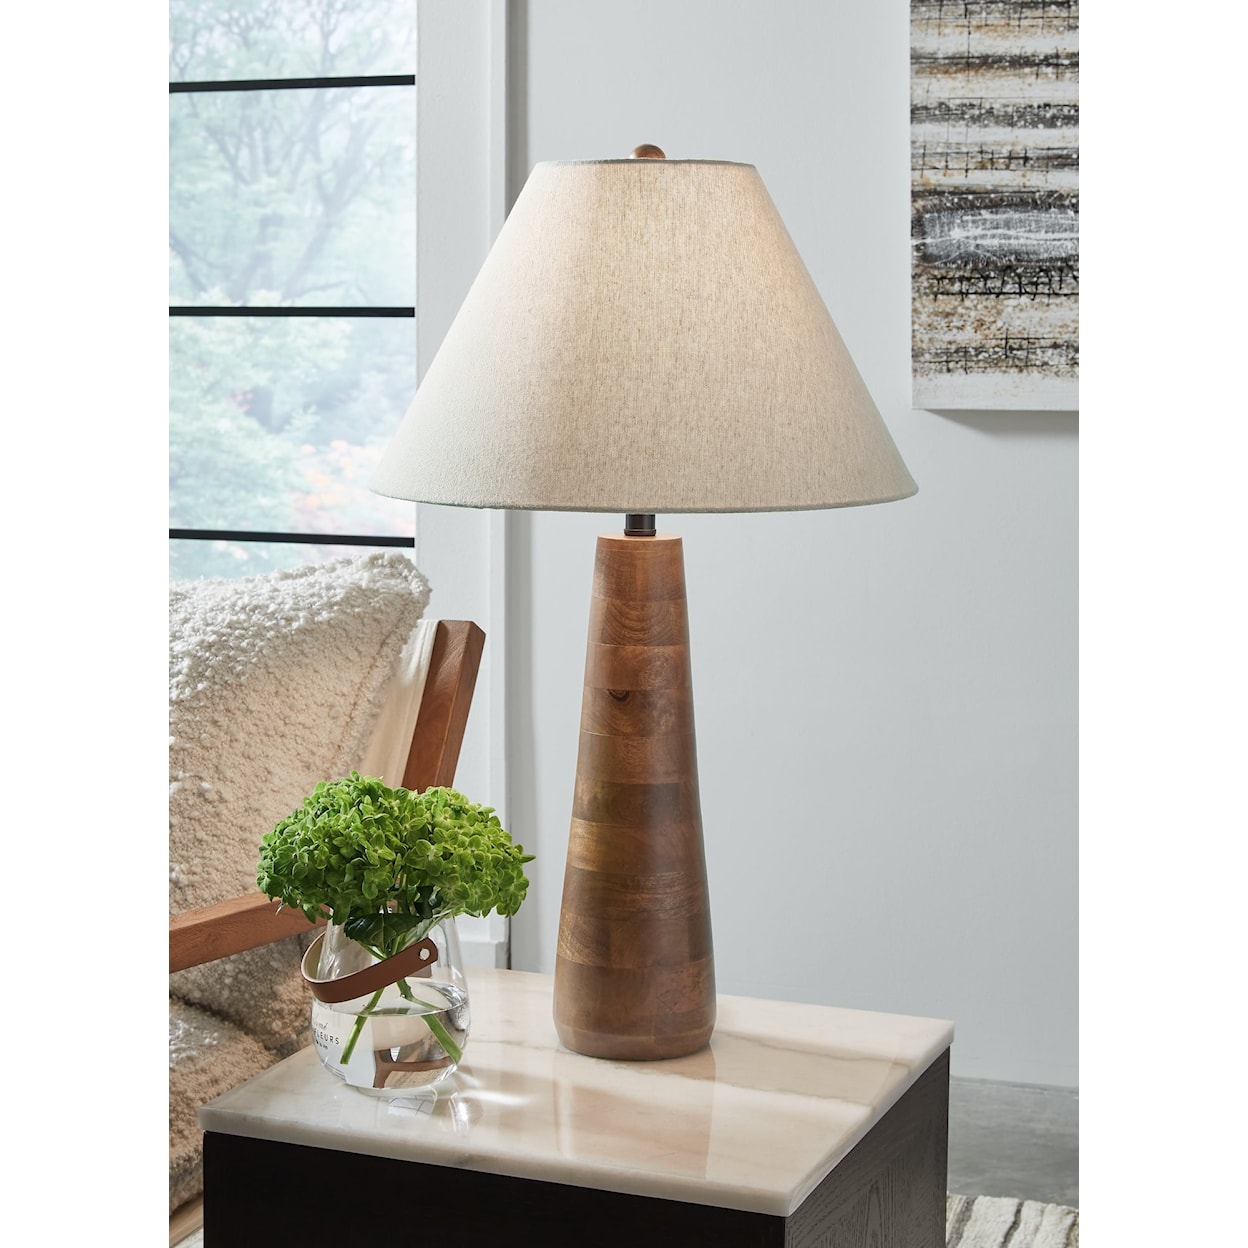 Ashley Furniture Signature Design Danset Wood Table Lamp